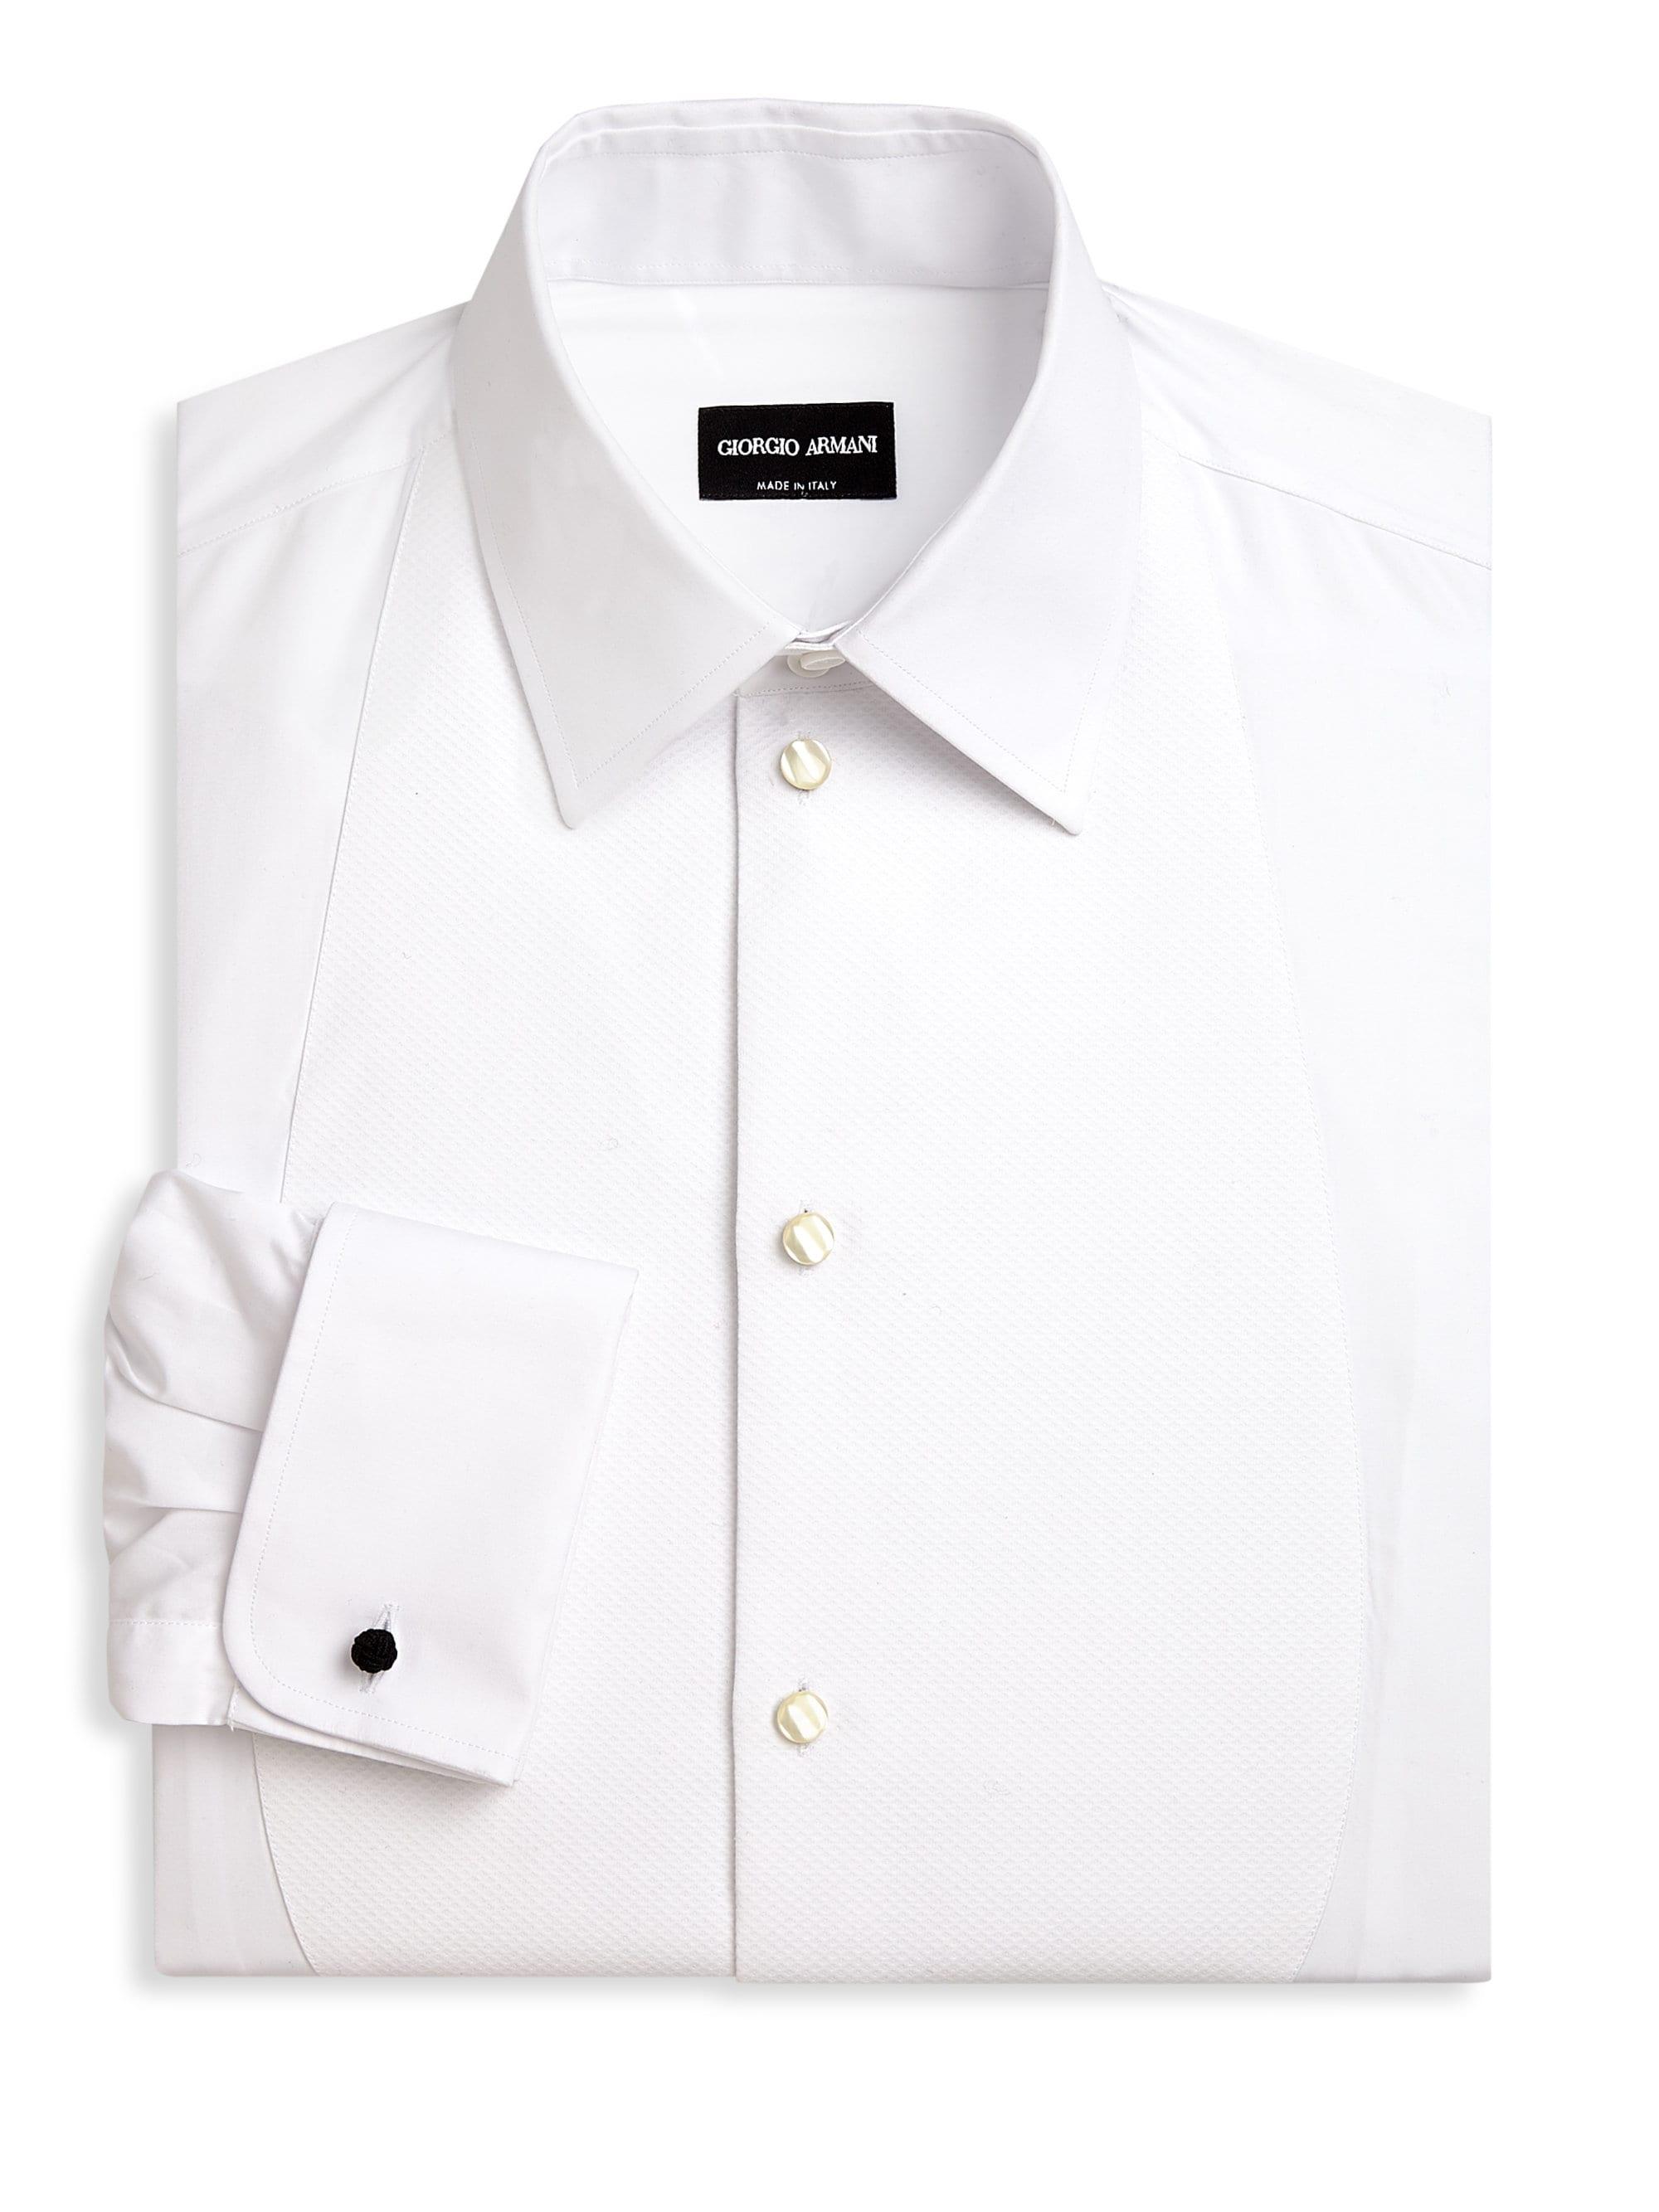 Lyst - Giorgio Armani Men's French Cuff Slim-fit Dress Shirt - White